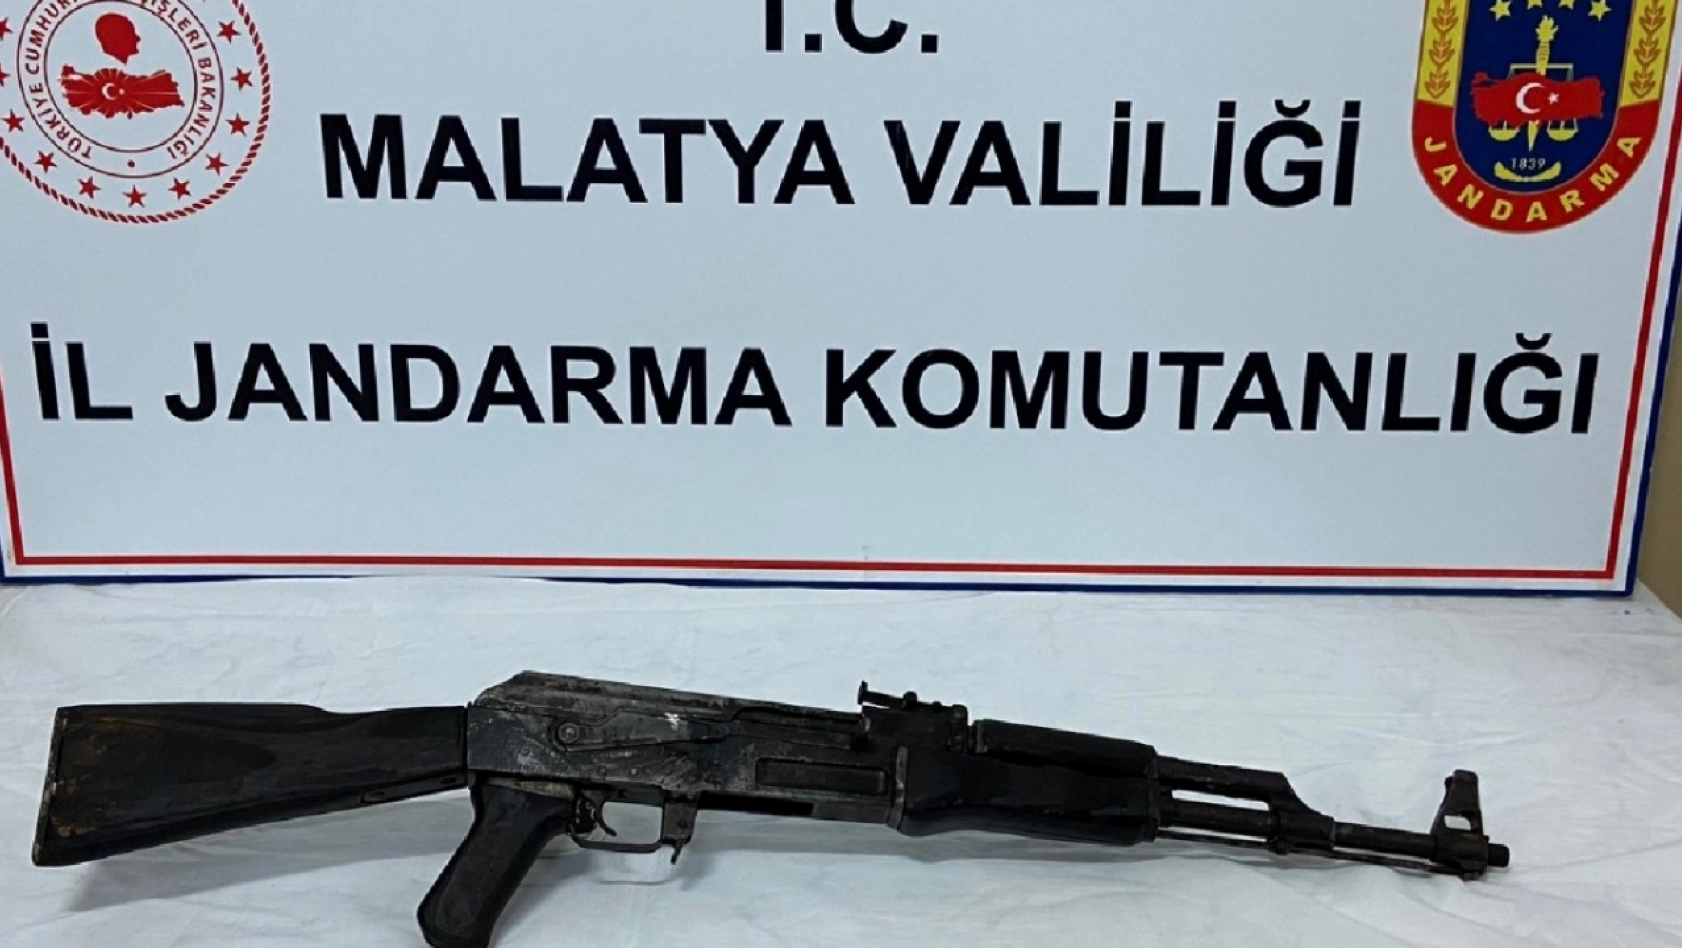 Malatya'da kalaşnikof silah ele geçirildi